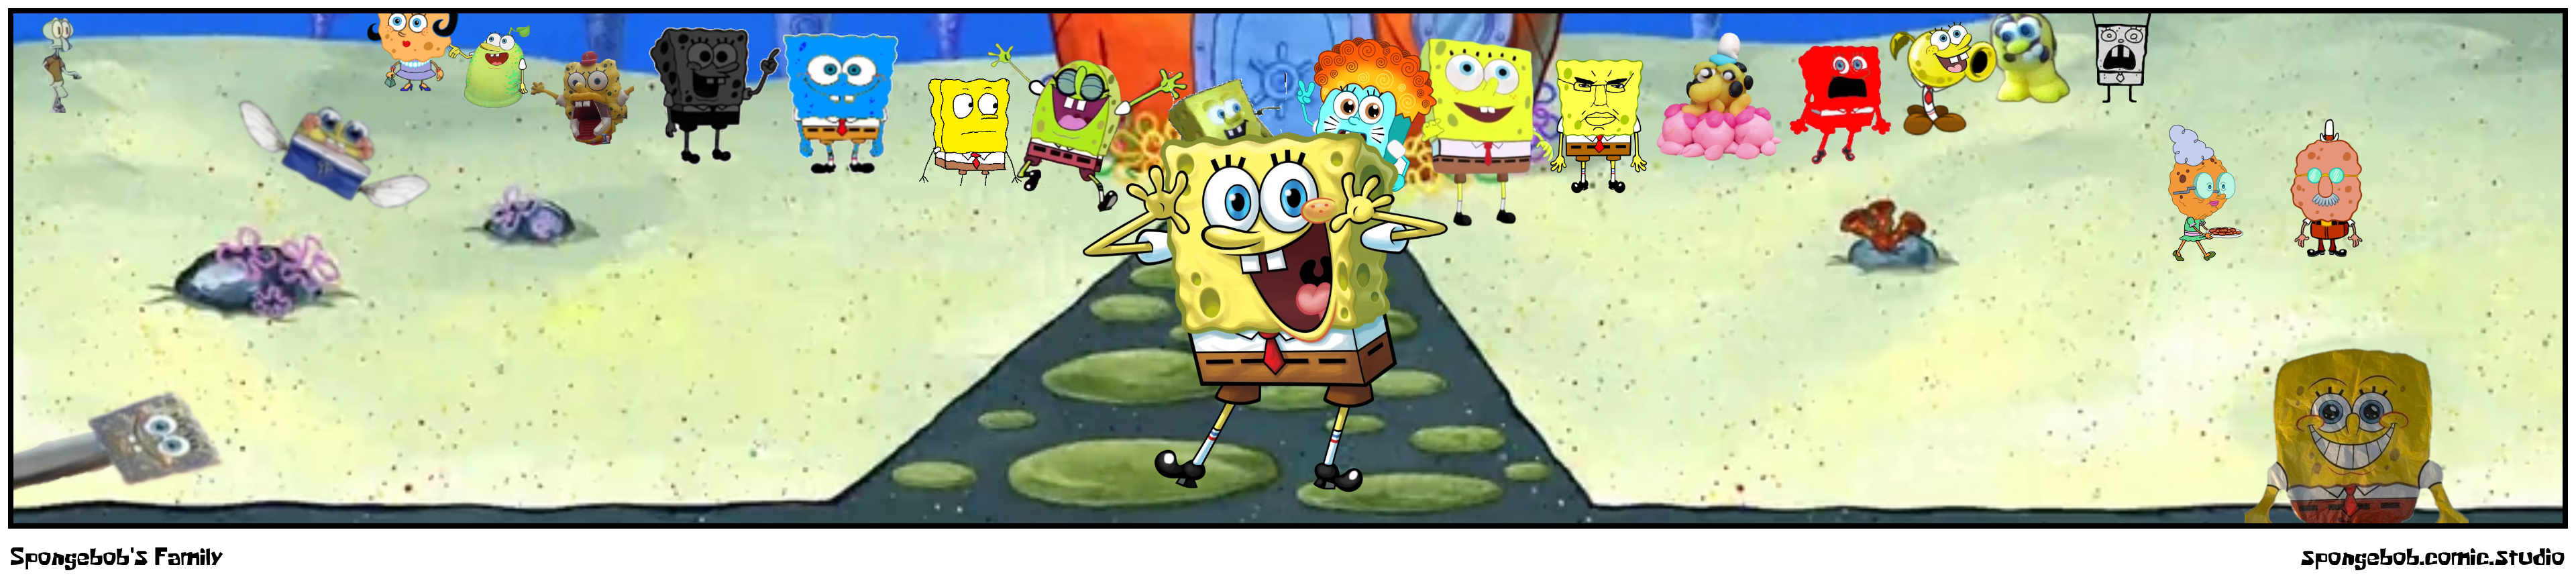 Spongebob's Family